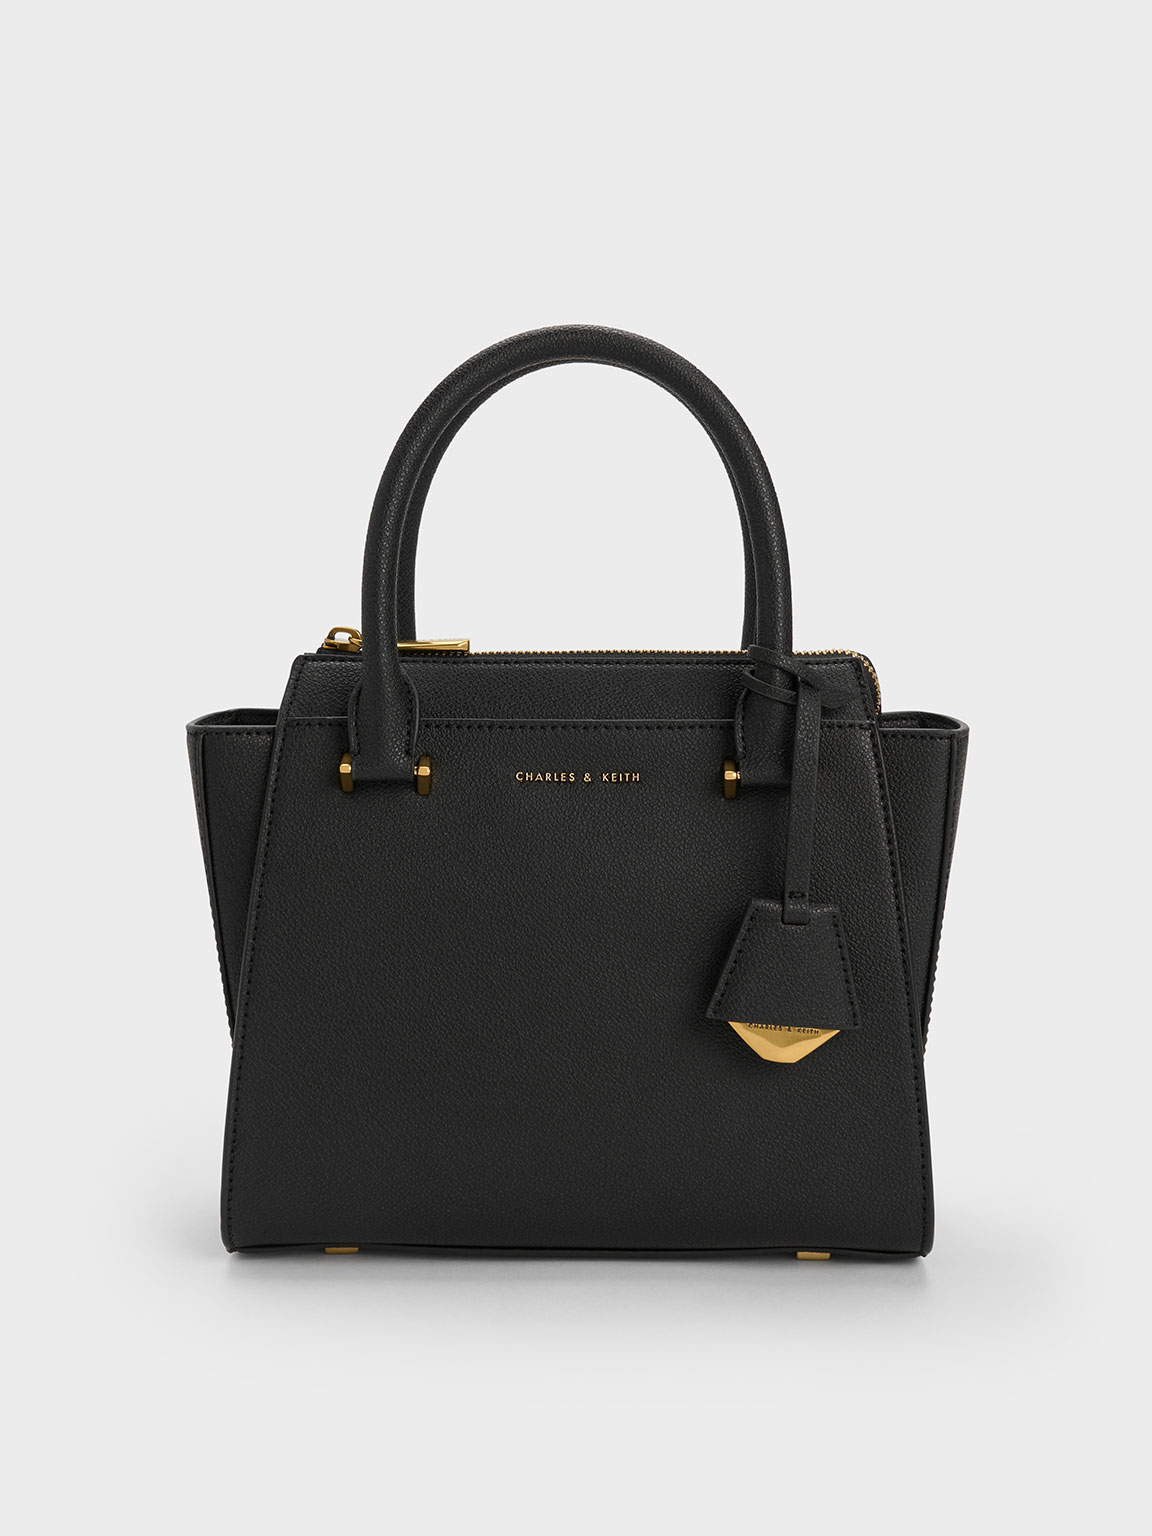 Baground Multipurpose Women’s Tote Bags with Zip | Stylish Tote Bags | Tote Handbag